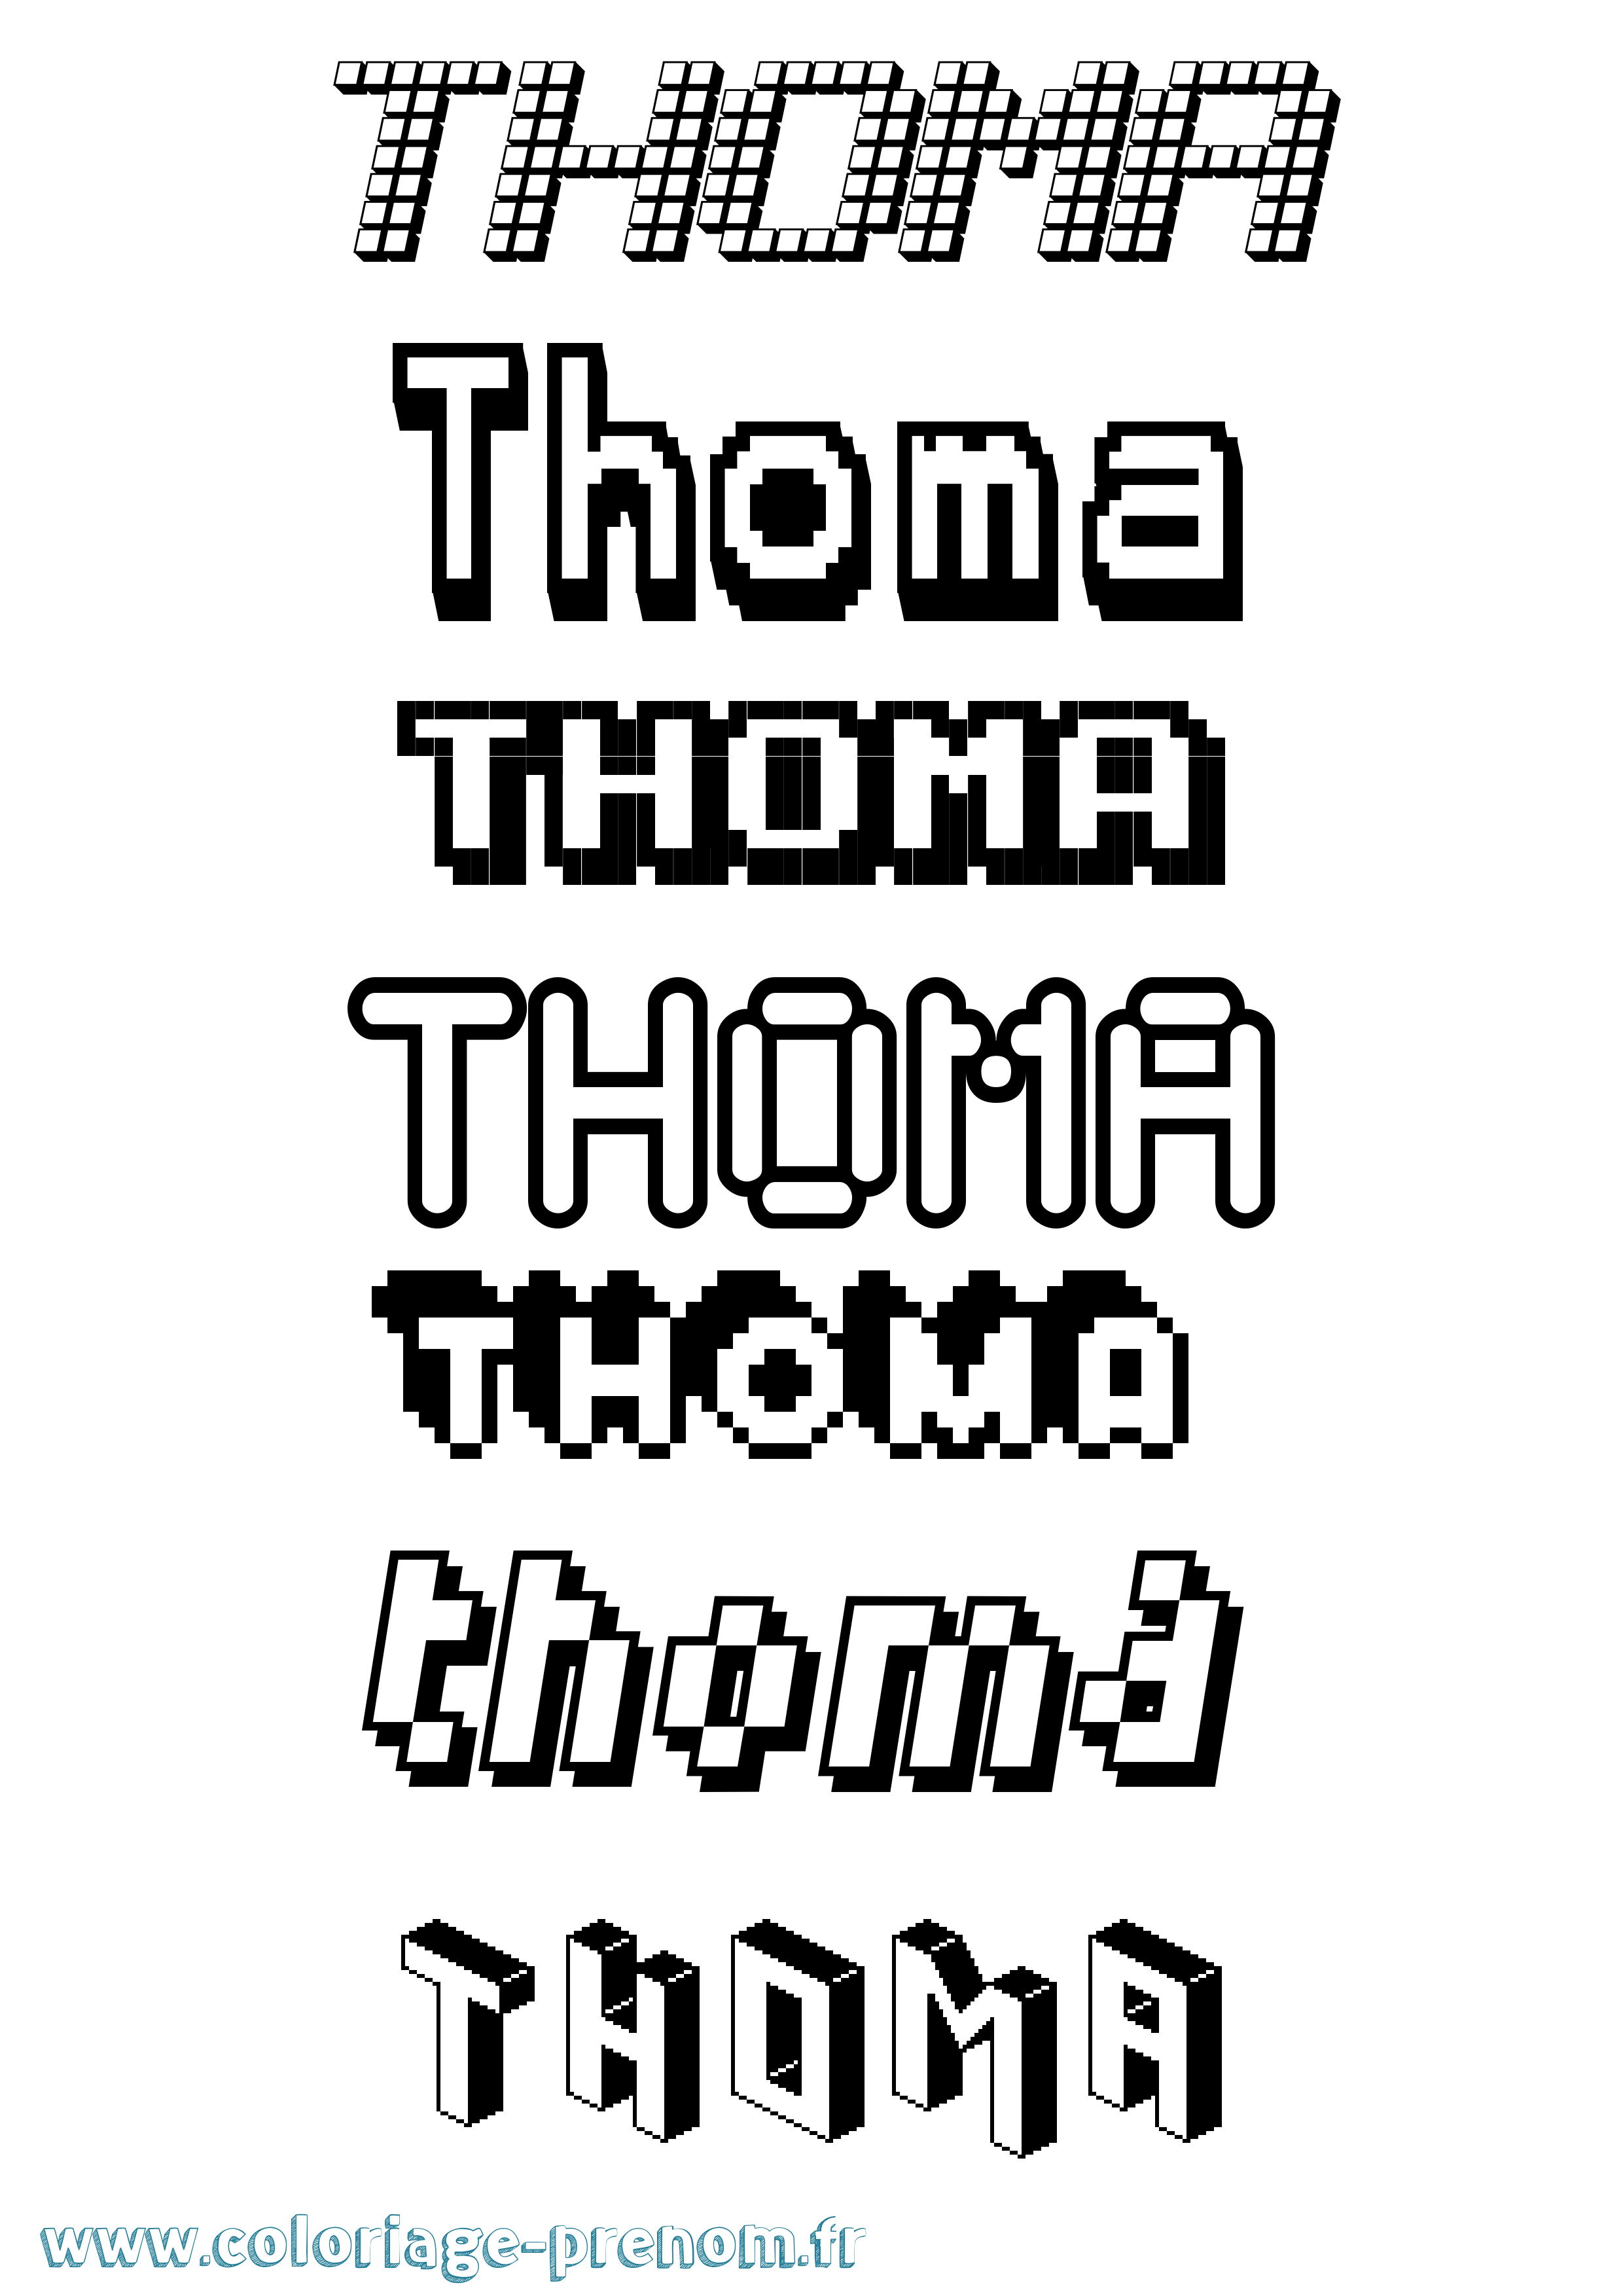 Coloriage prénom Thoma Pixel